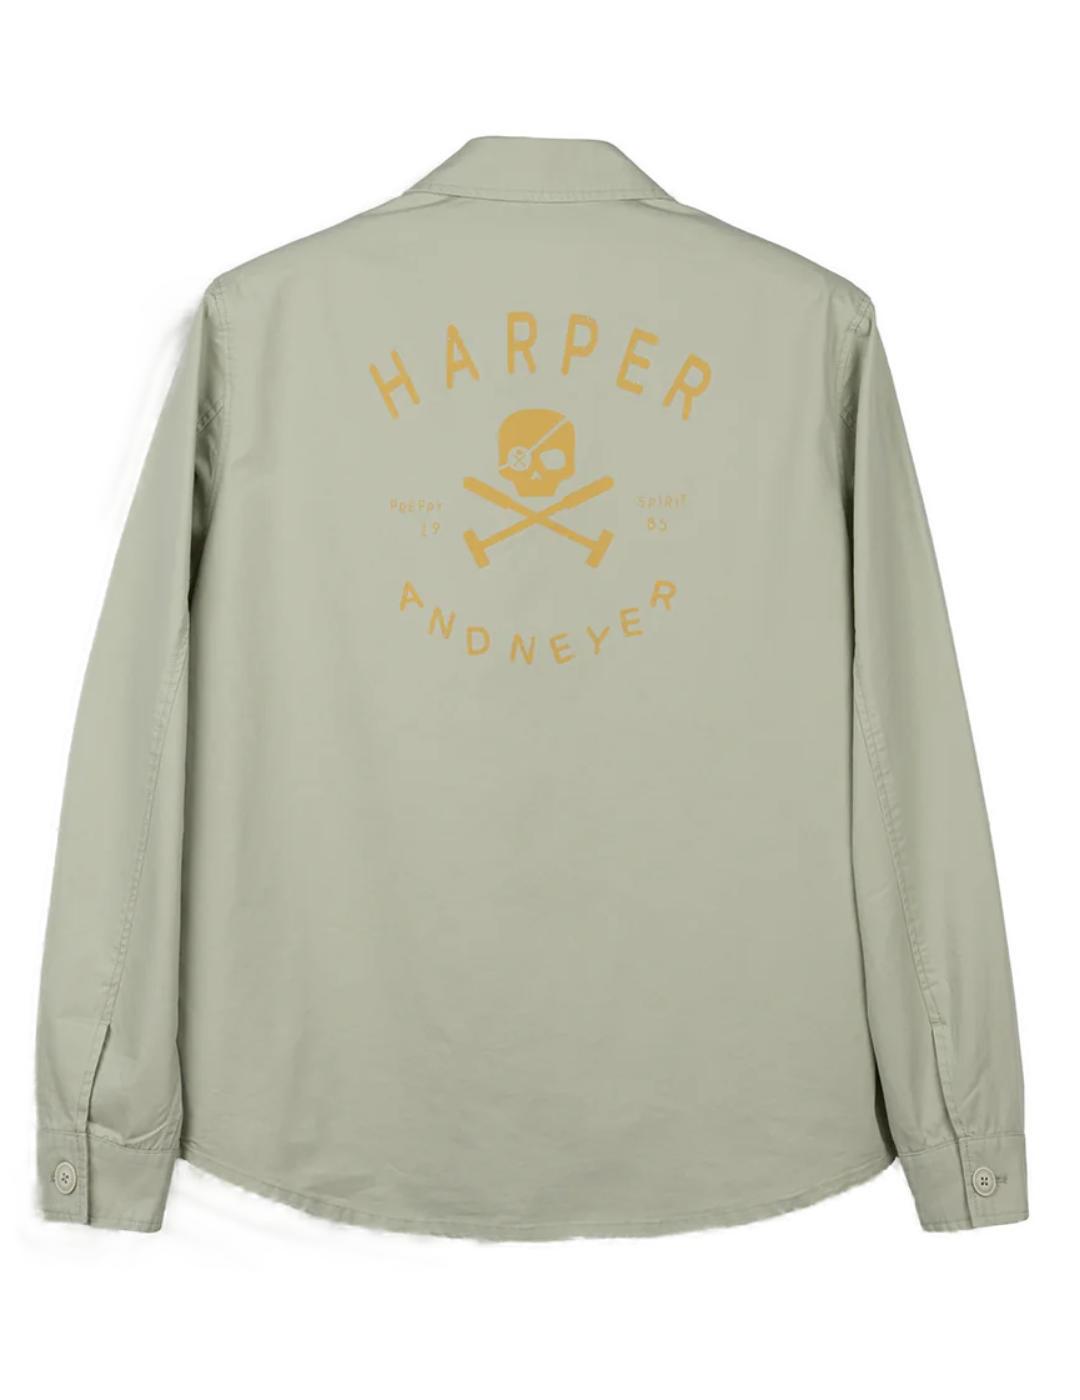 Sobrecamisa Harper Skull verde claro logotipo para hombre